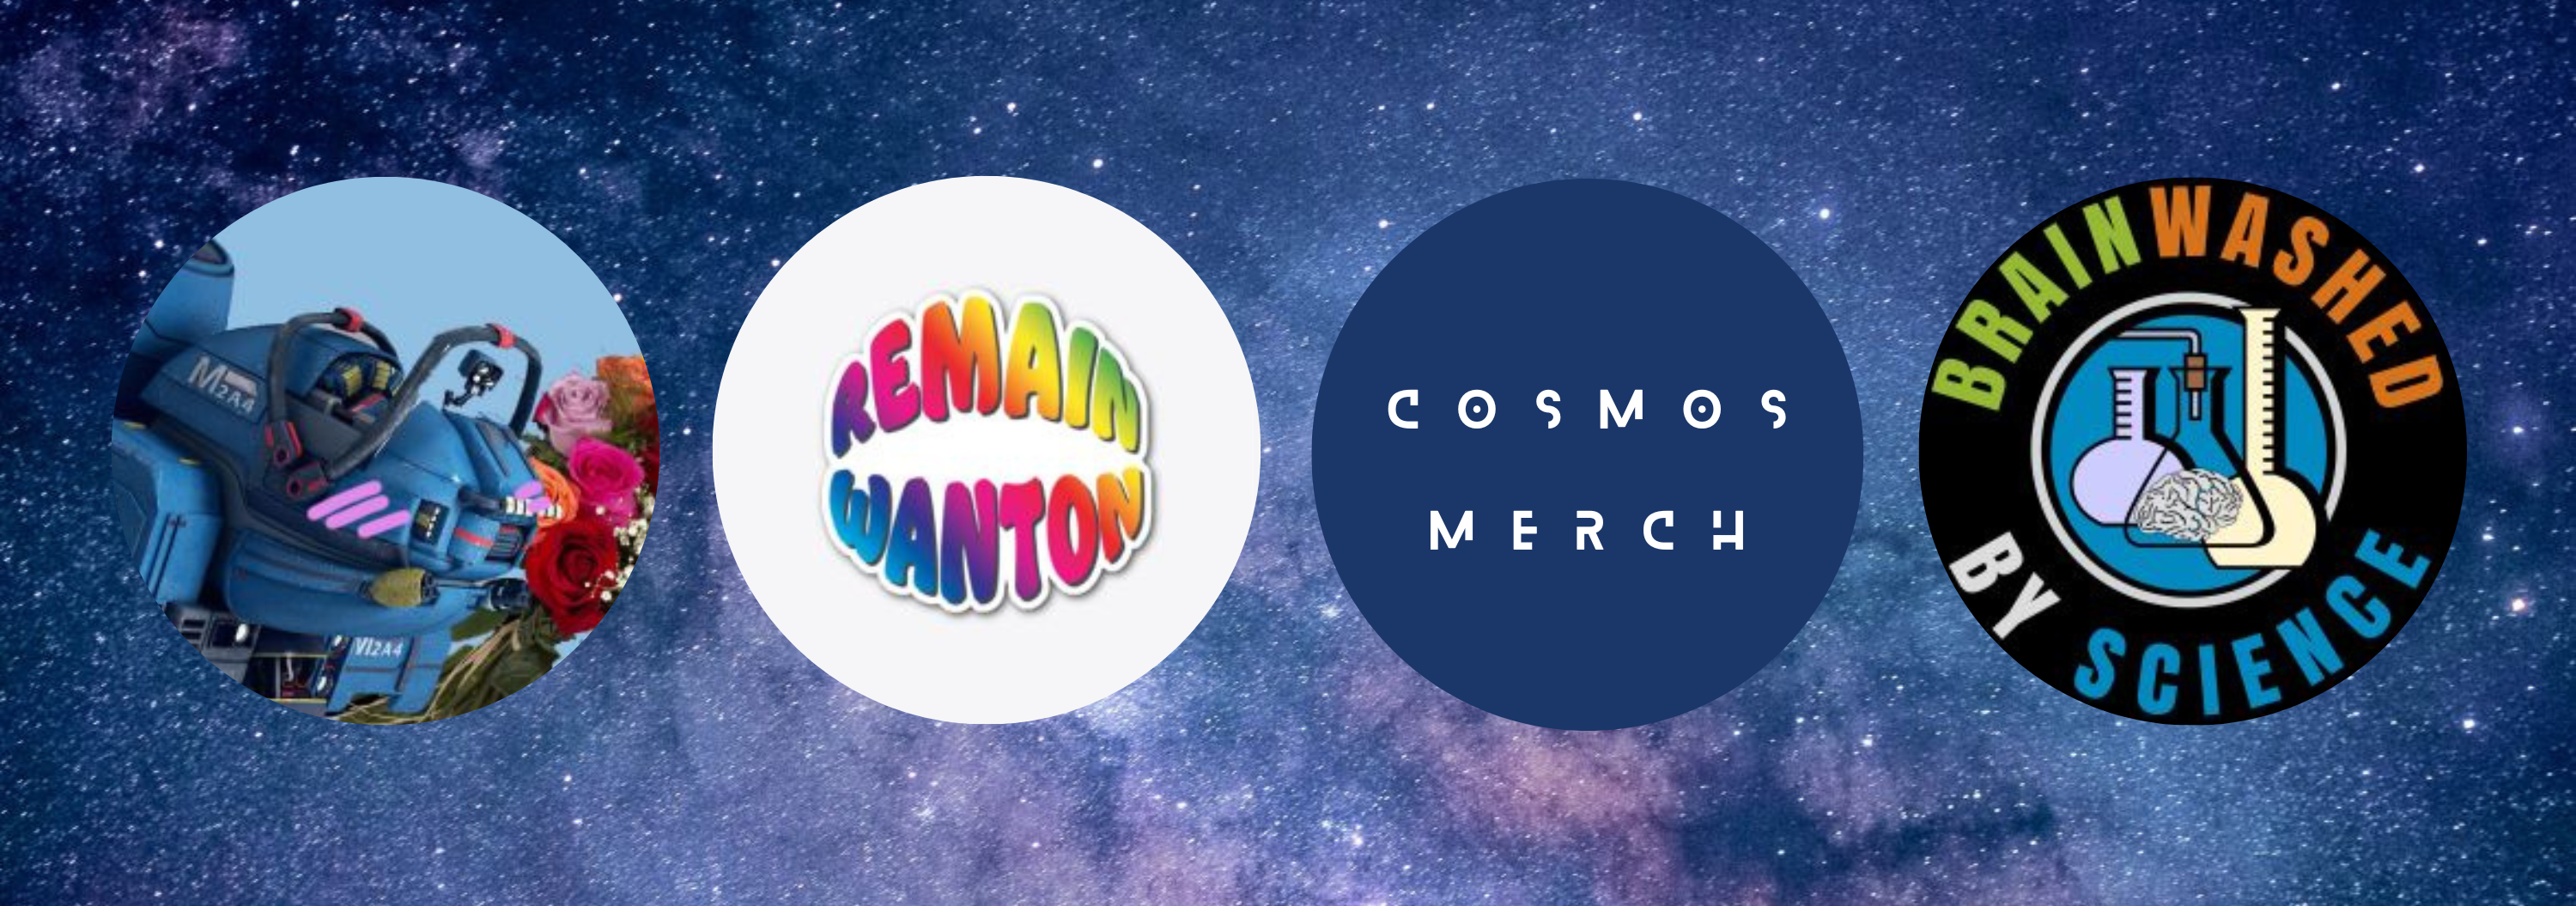 Cosmos Merch banner image